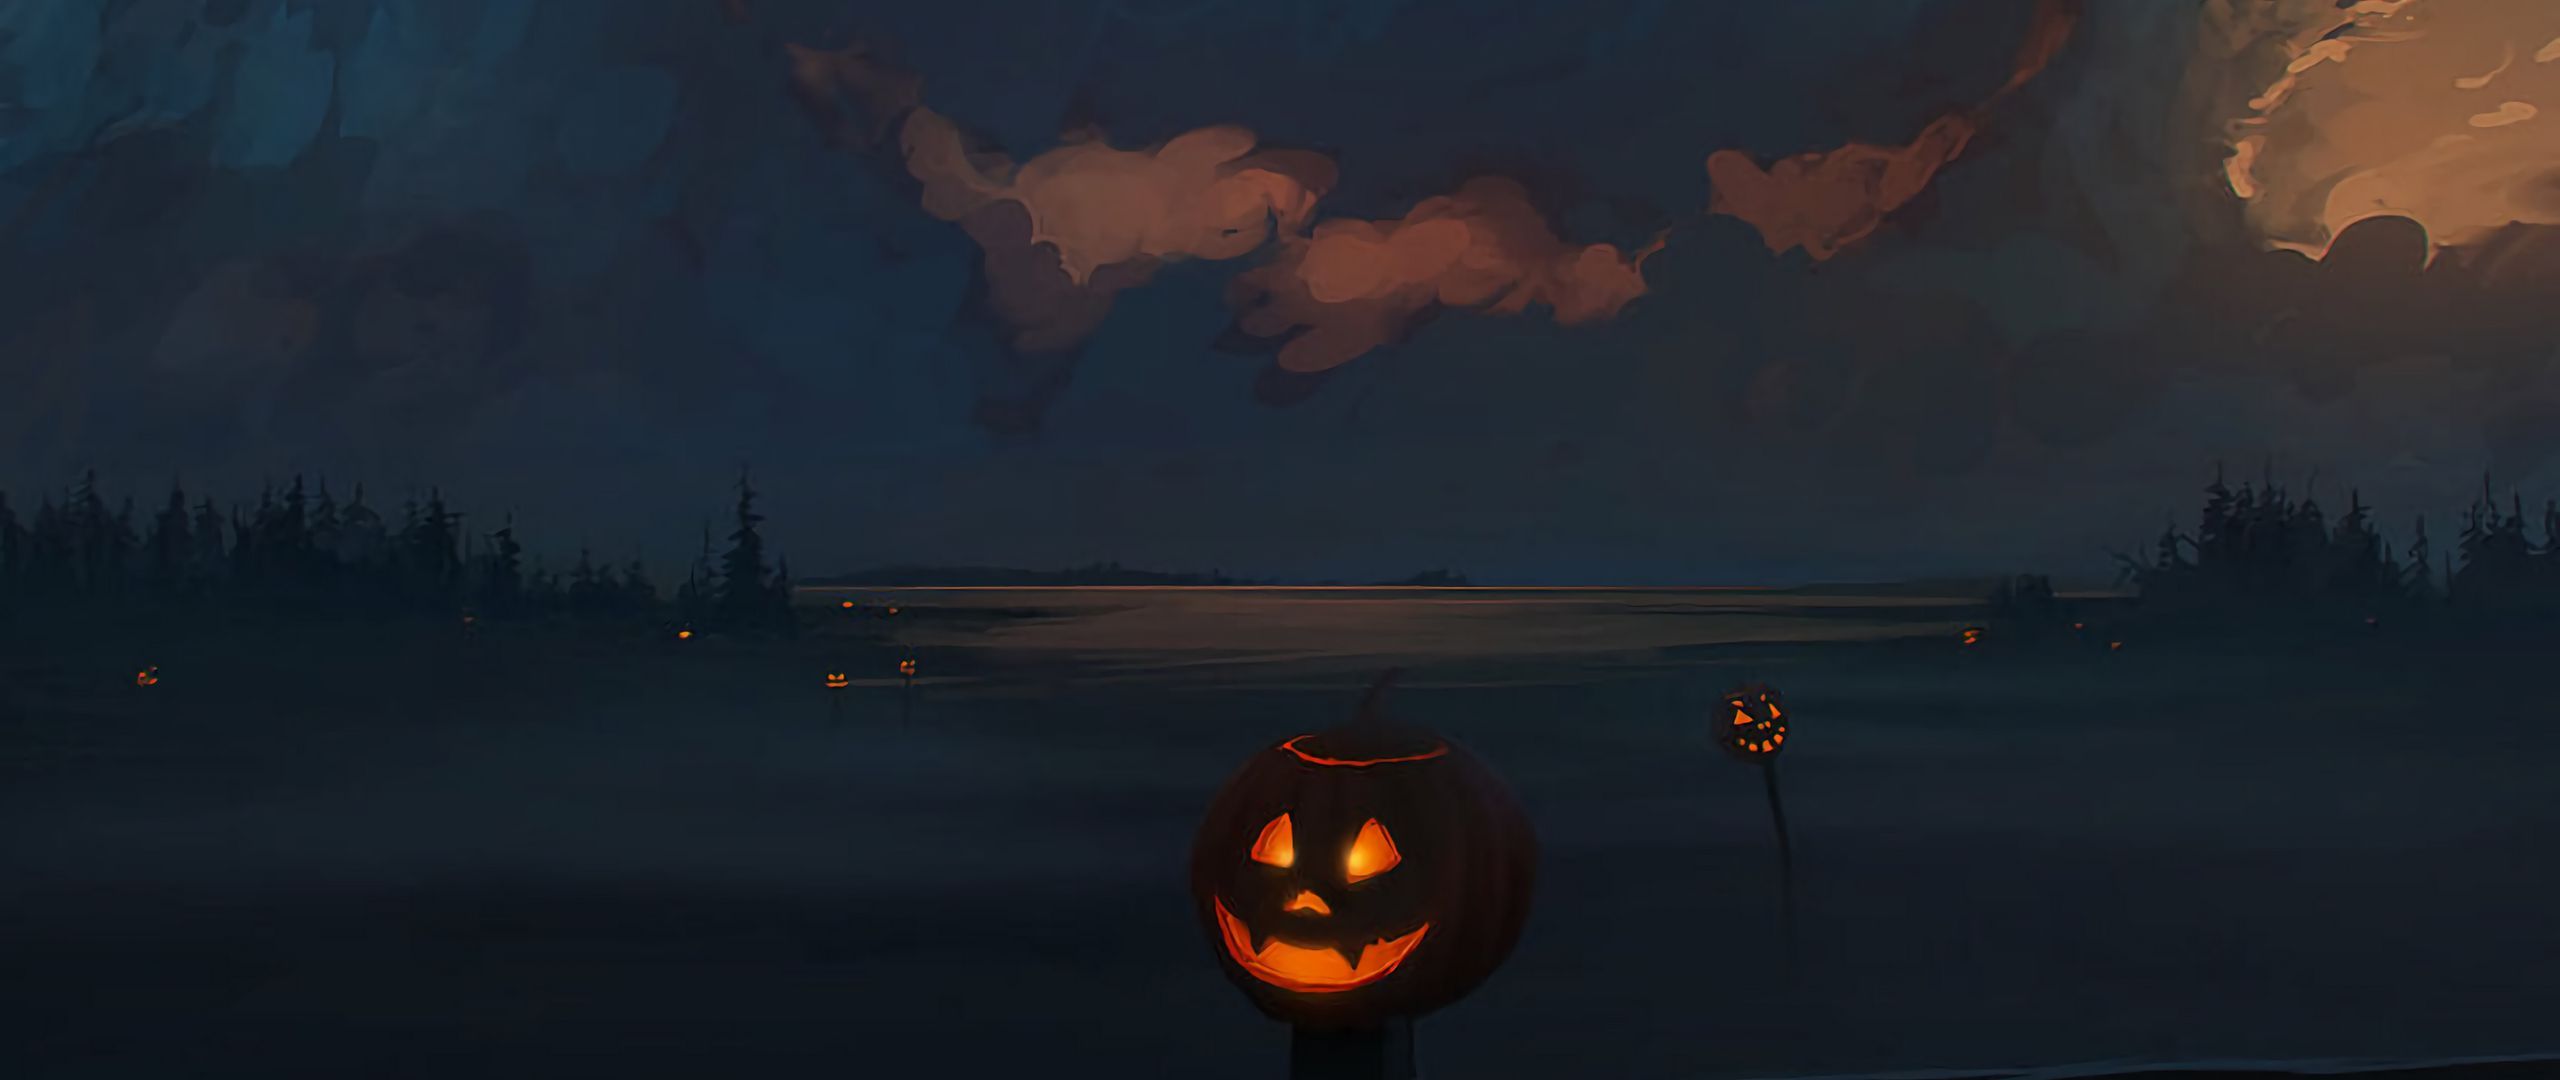 Download wallpaper 2560x1080 jack o lantern, pumpkin, halloween, art, clouds dual wide 1080p HD background